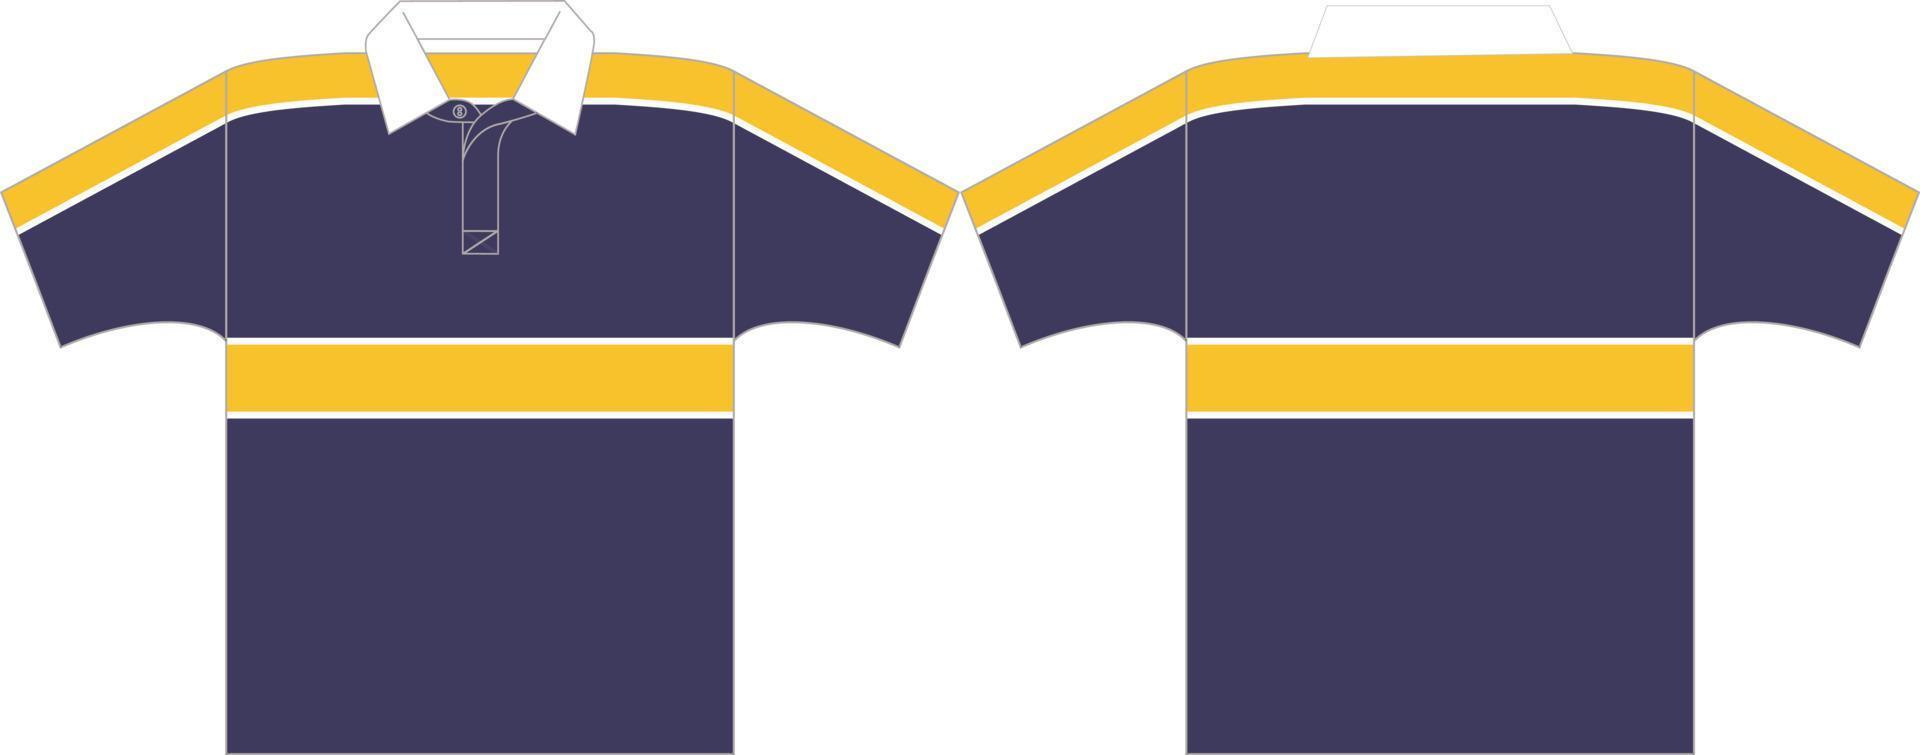 Polohemd, T-Shirts, Rugbyhemd. Tempelate, Vektordesign kostenloser Download vektor